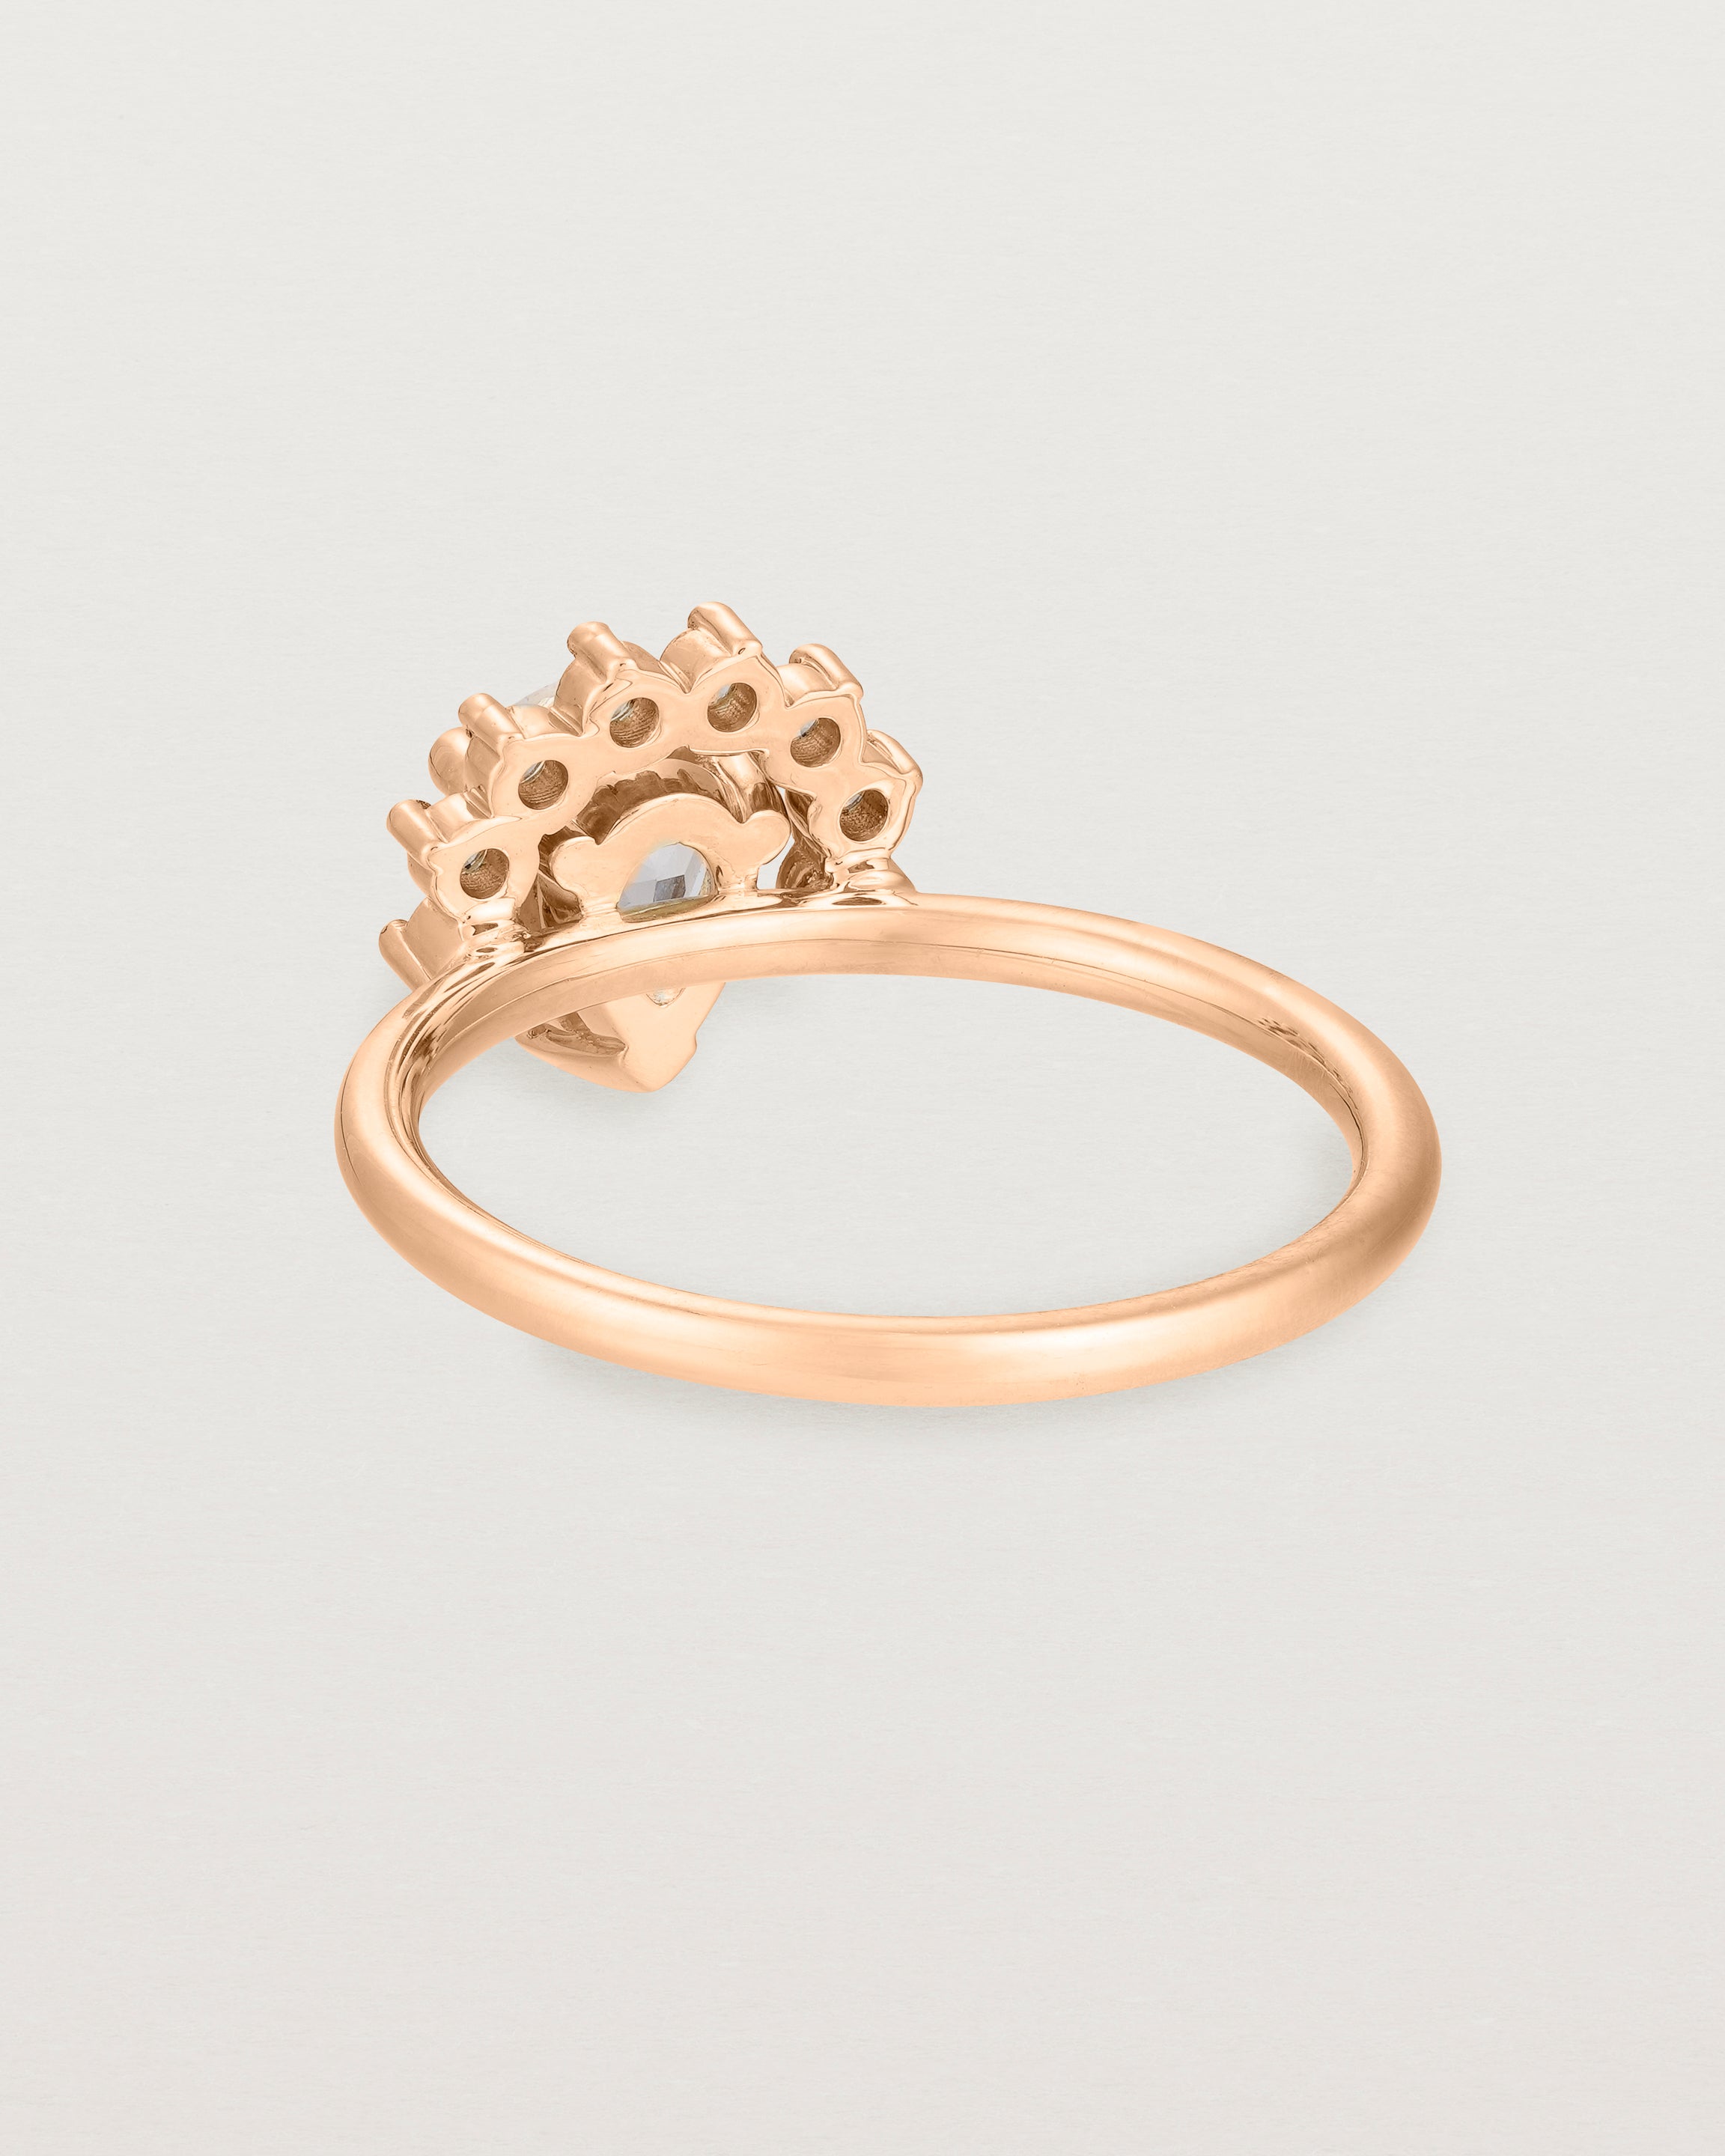 Back view of the Rose Ring | Morganite & Diamonds | Rose Gold.